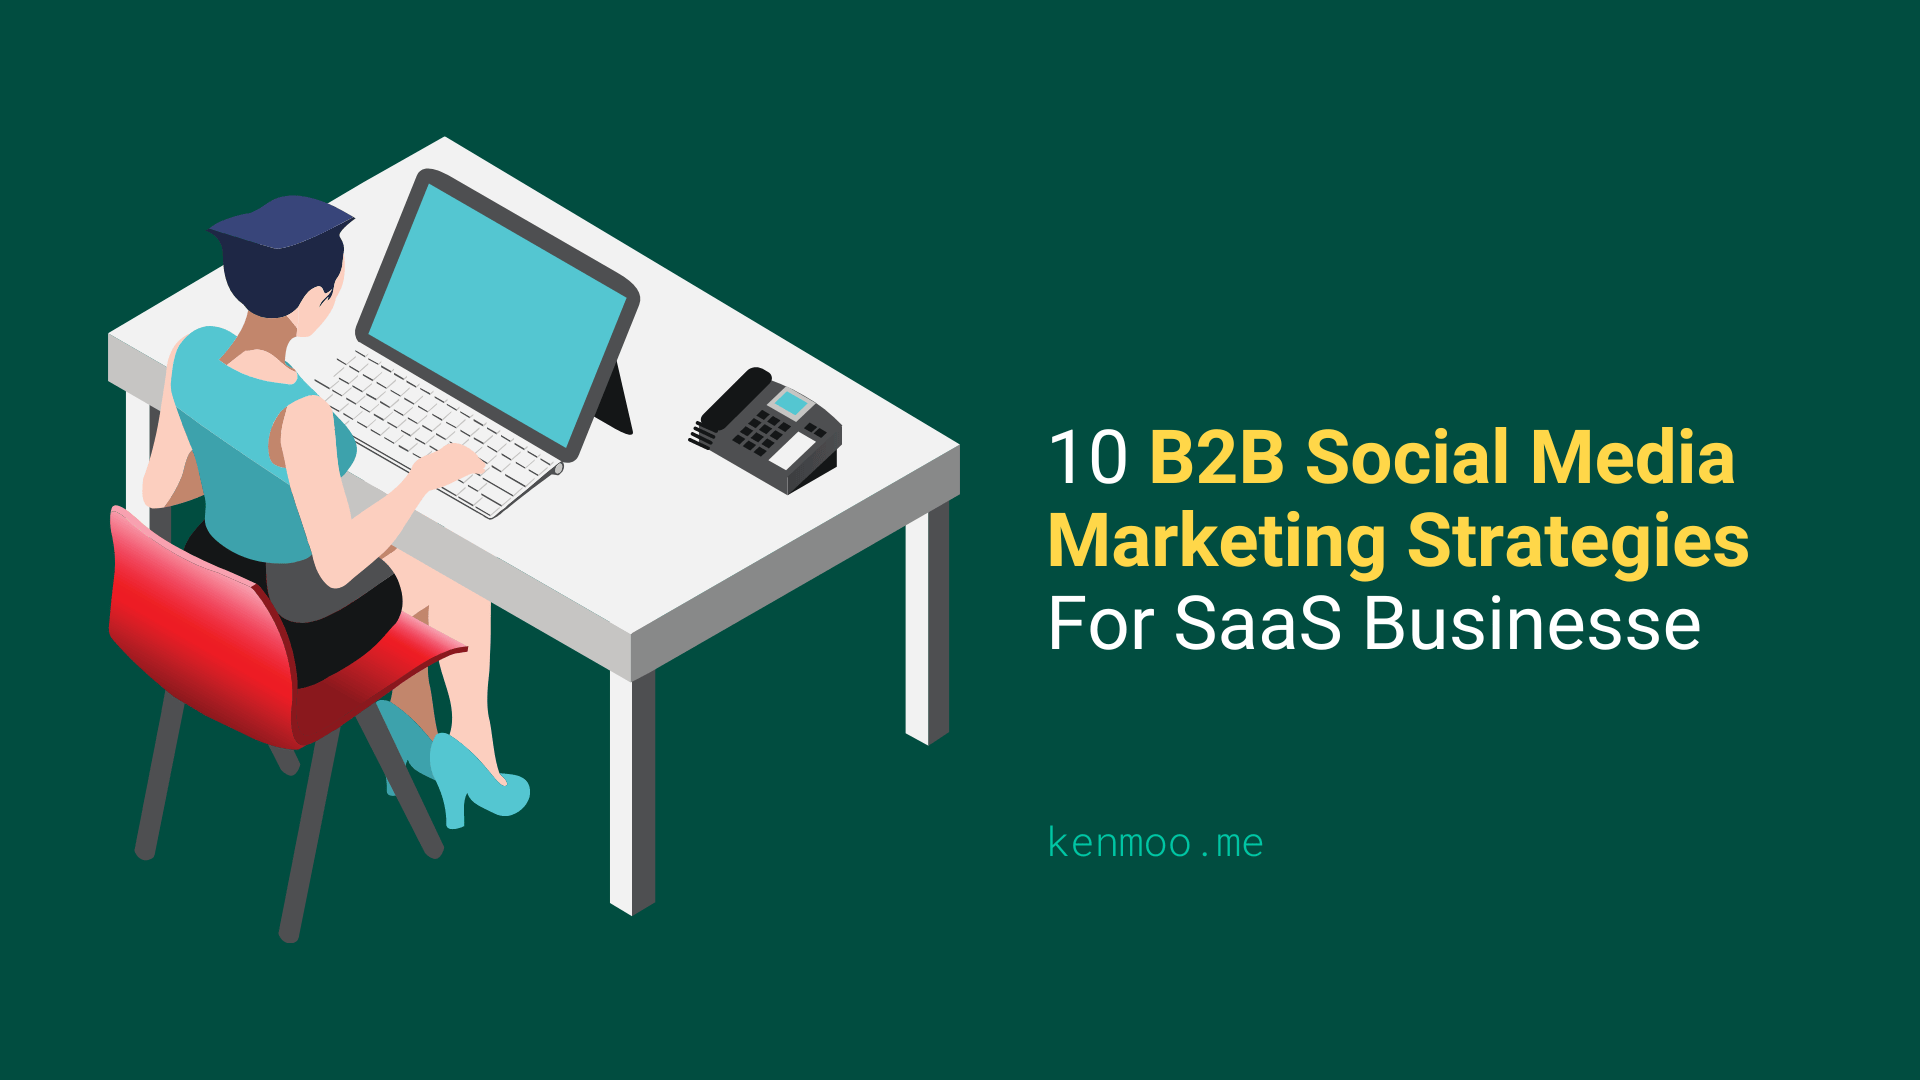 10 B2B Social Media Marketing Strategies For SaaS Businesses